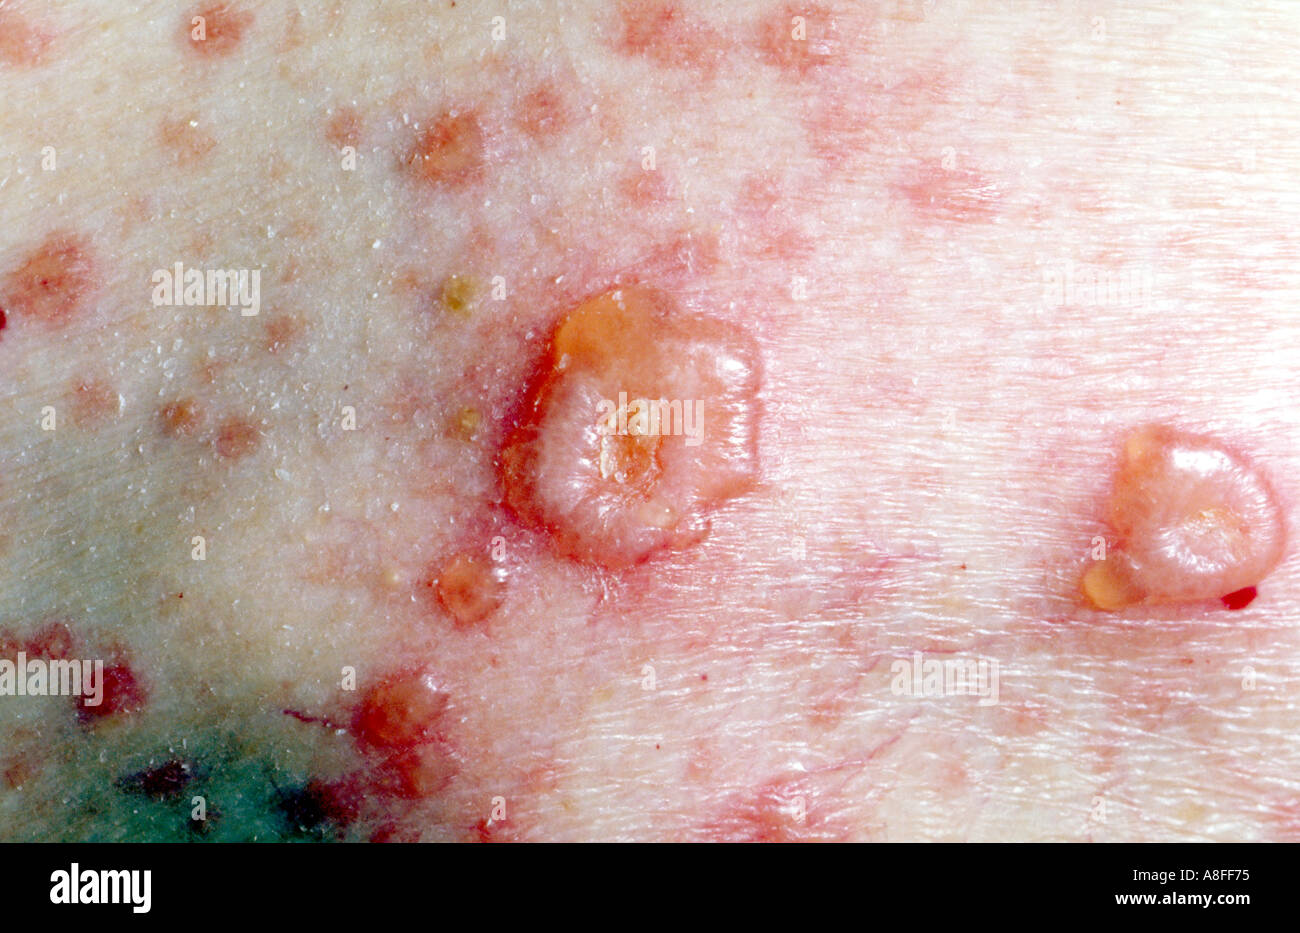 Chicken pox lesions Stock Photo